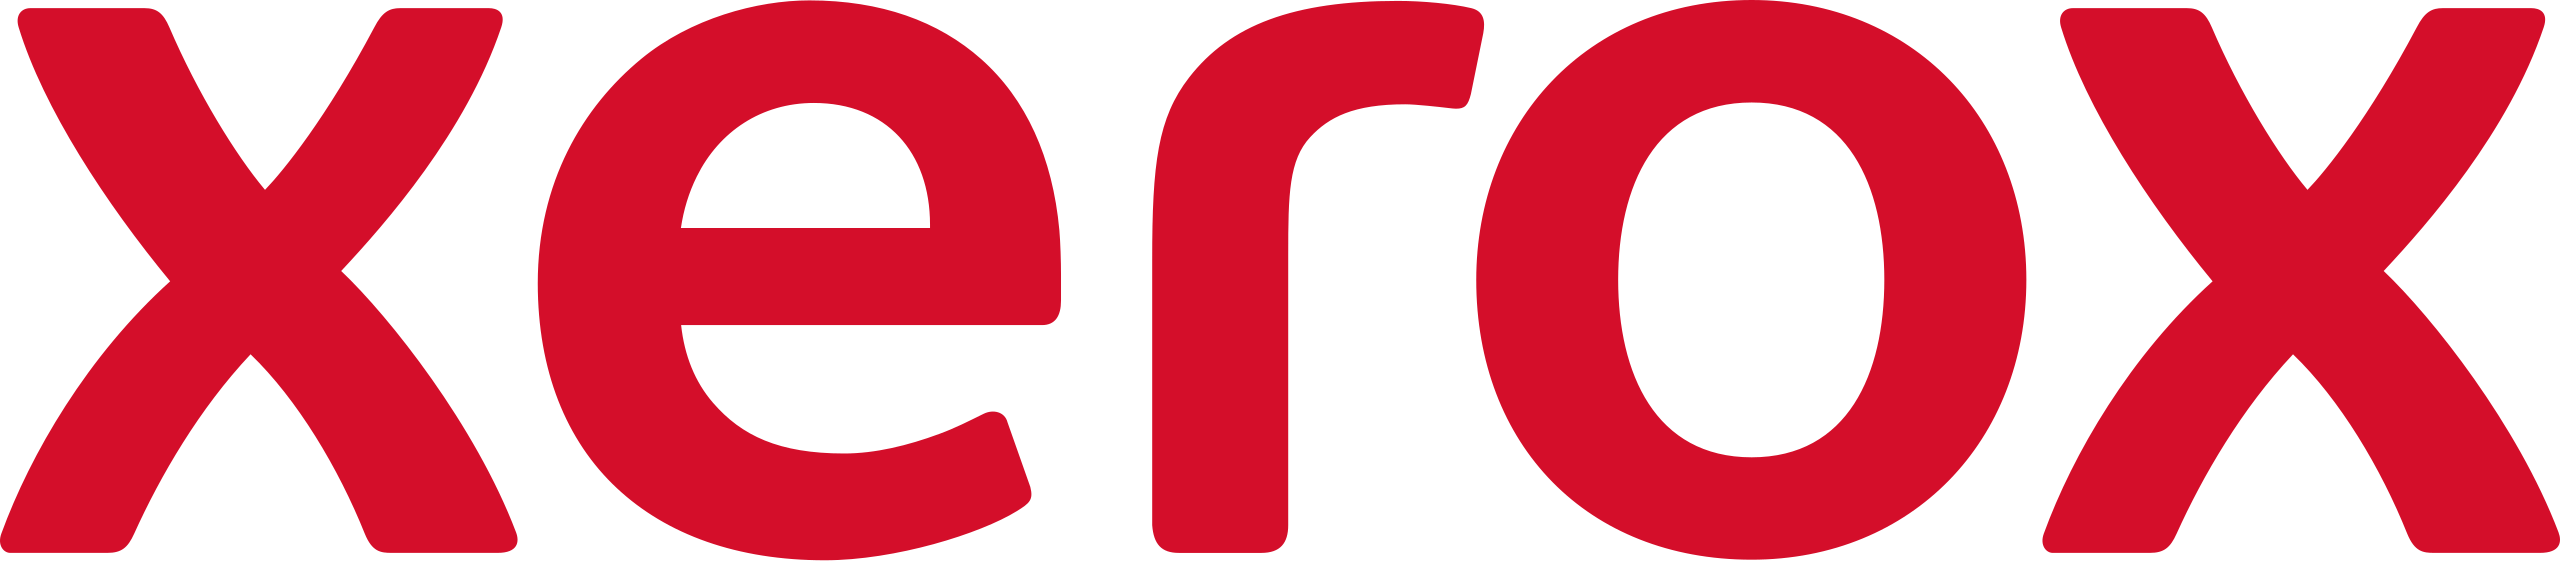 Xerox Banner Logo